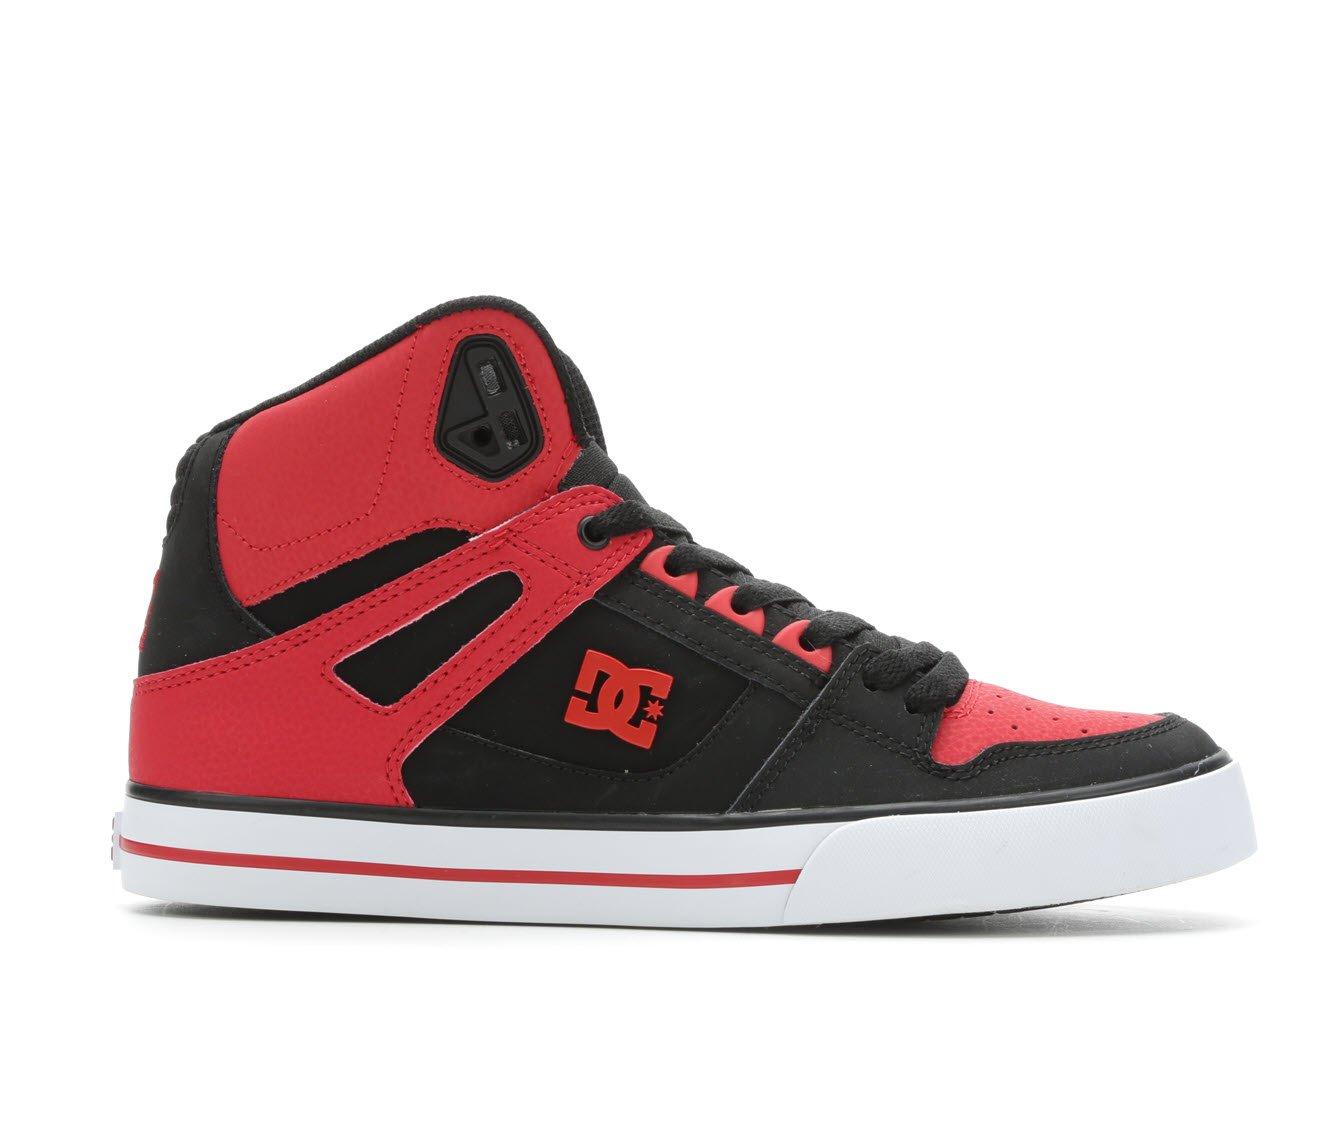 DC Boy's Unisex-Child Pure V Low Skate Shoe, Black/Black/Black, 3 Little Kid